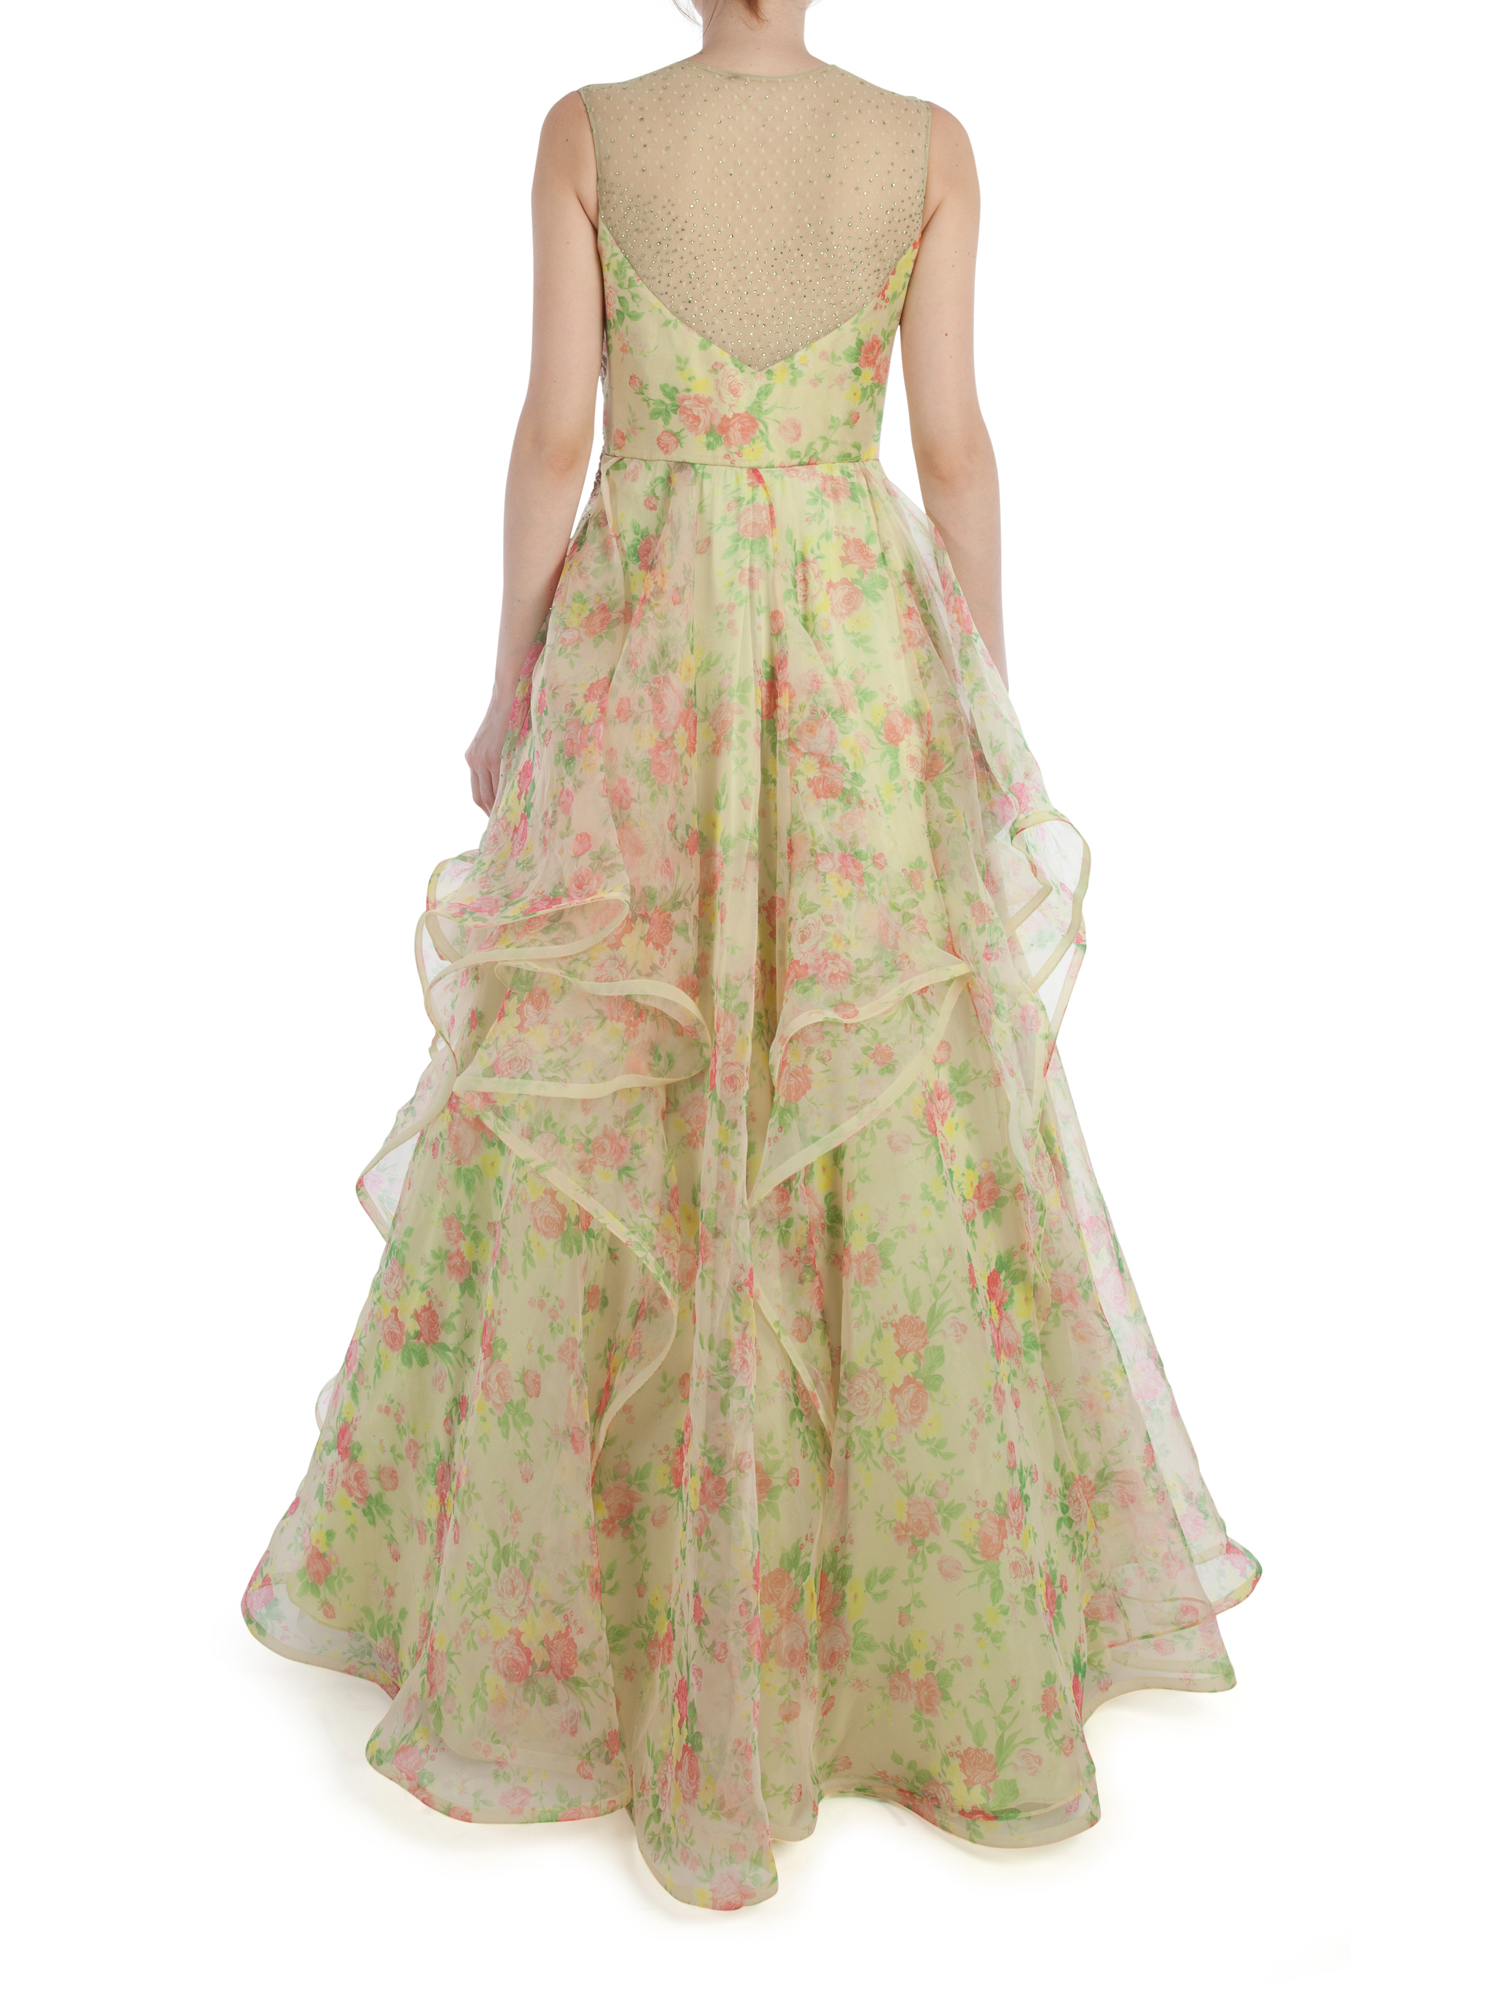 Alentejo spring floral gown by Dolly J | The Secret Label